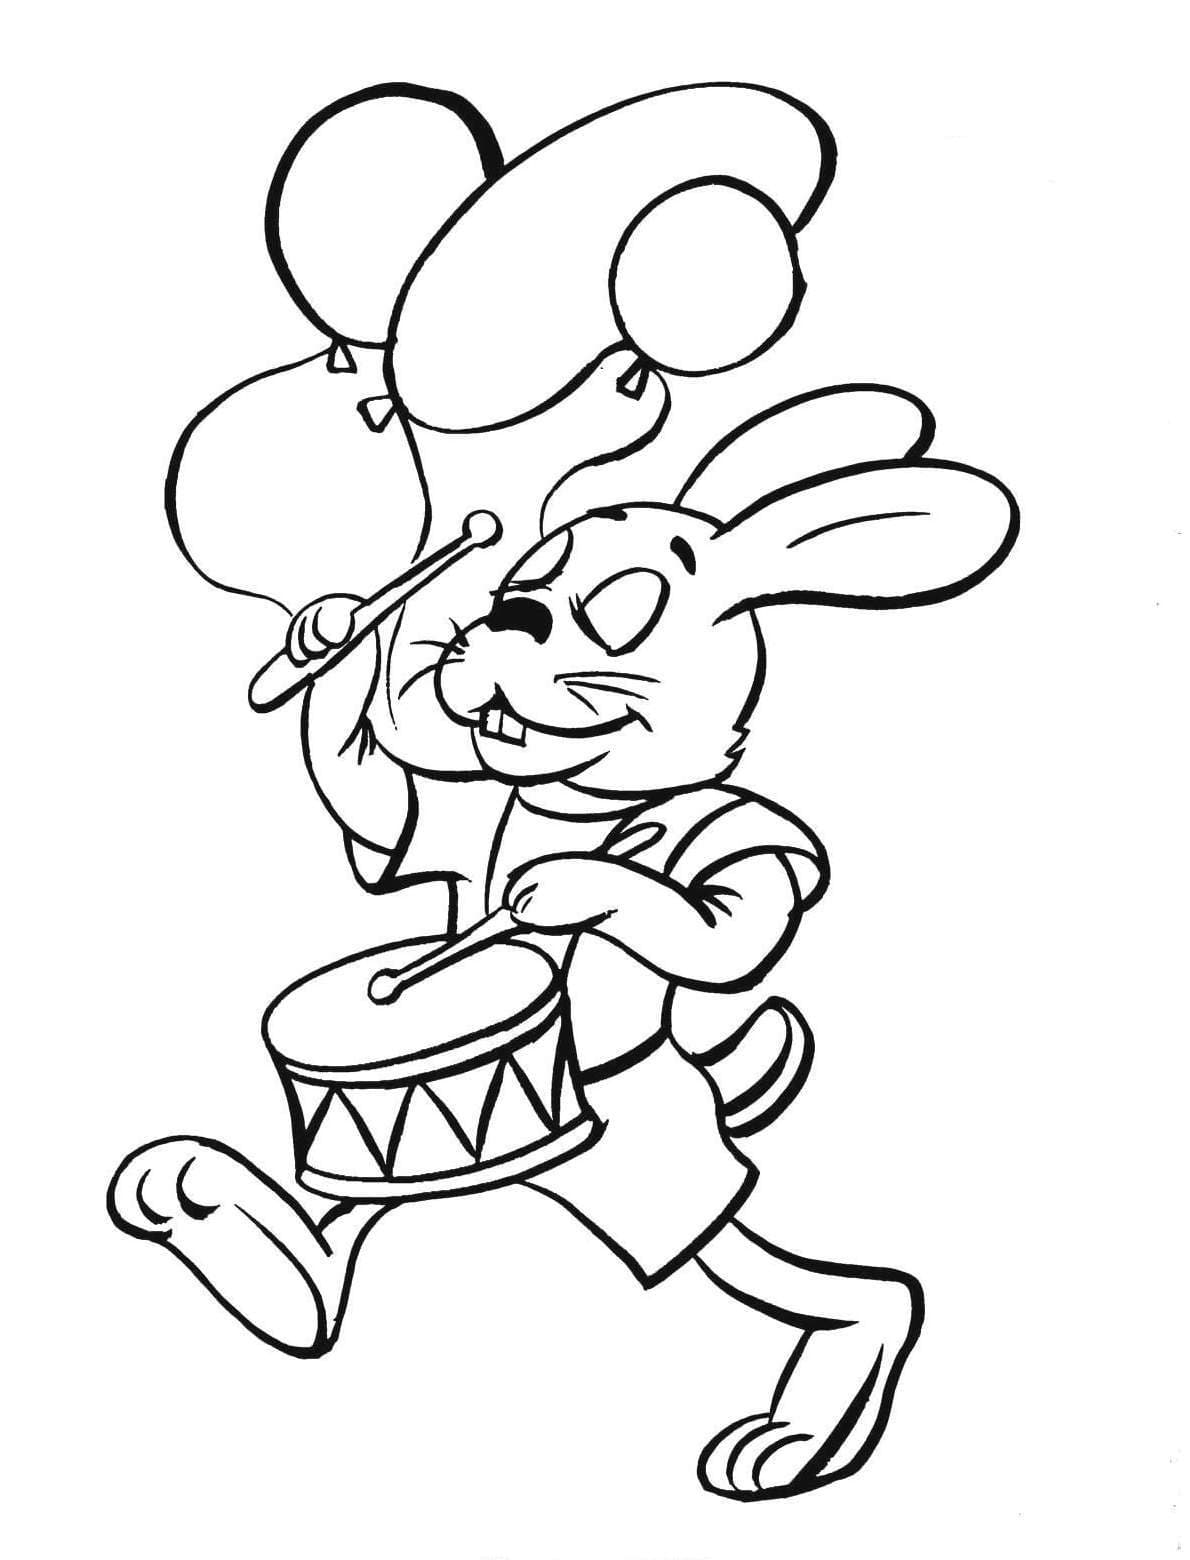 Заяц играет на барабане